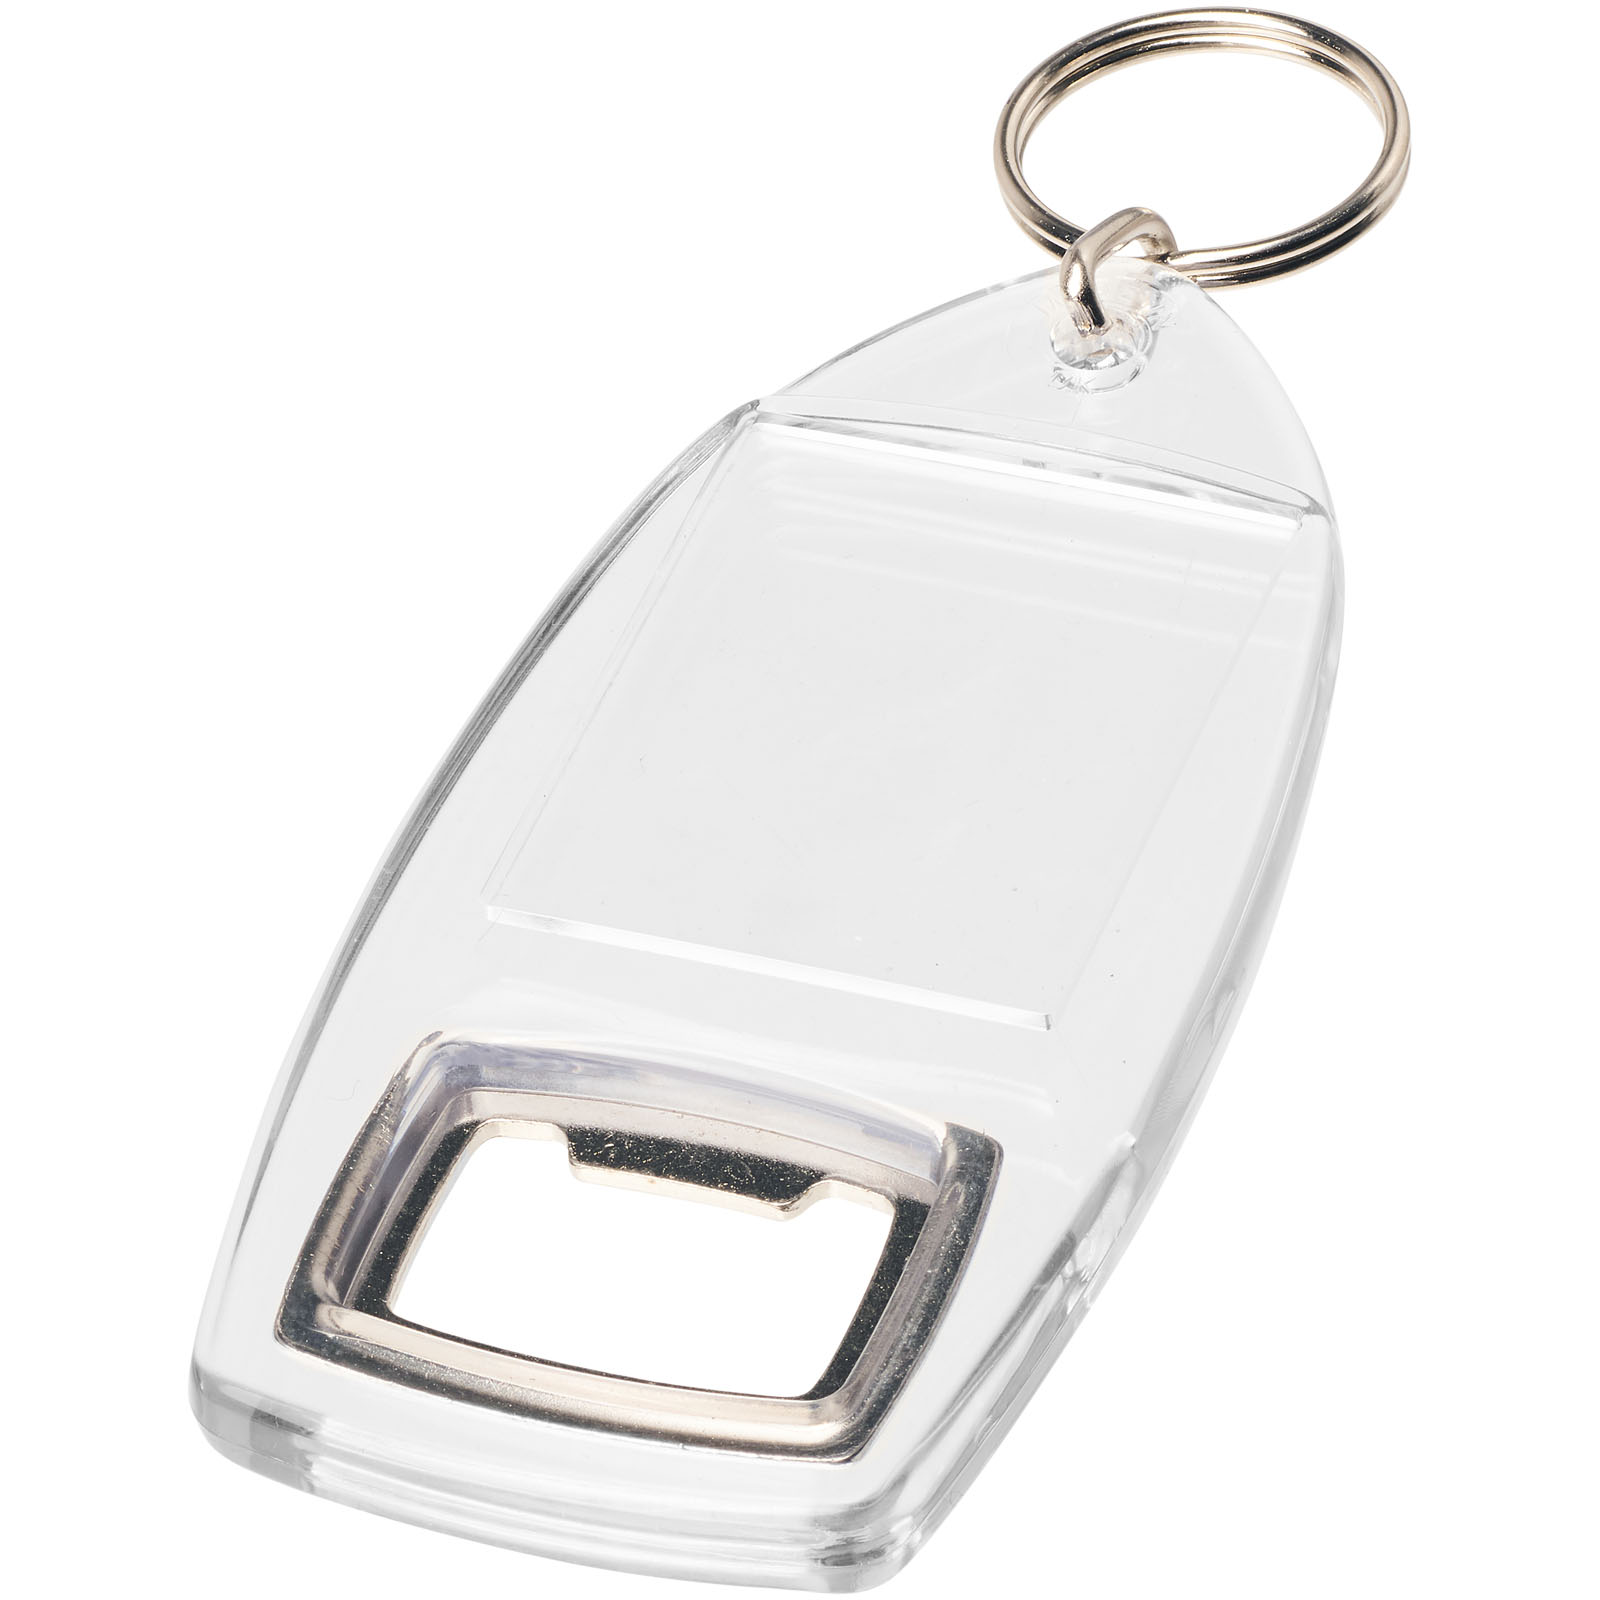 Advertising Bottle Openers & Accessories - Jibe R1 bottle opener keychain - 3